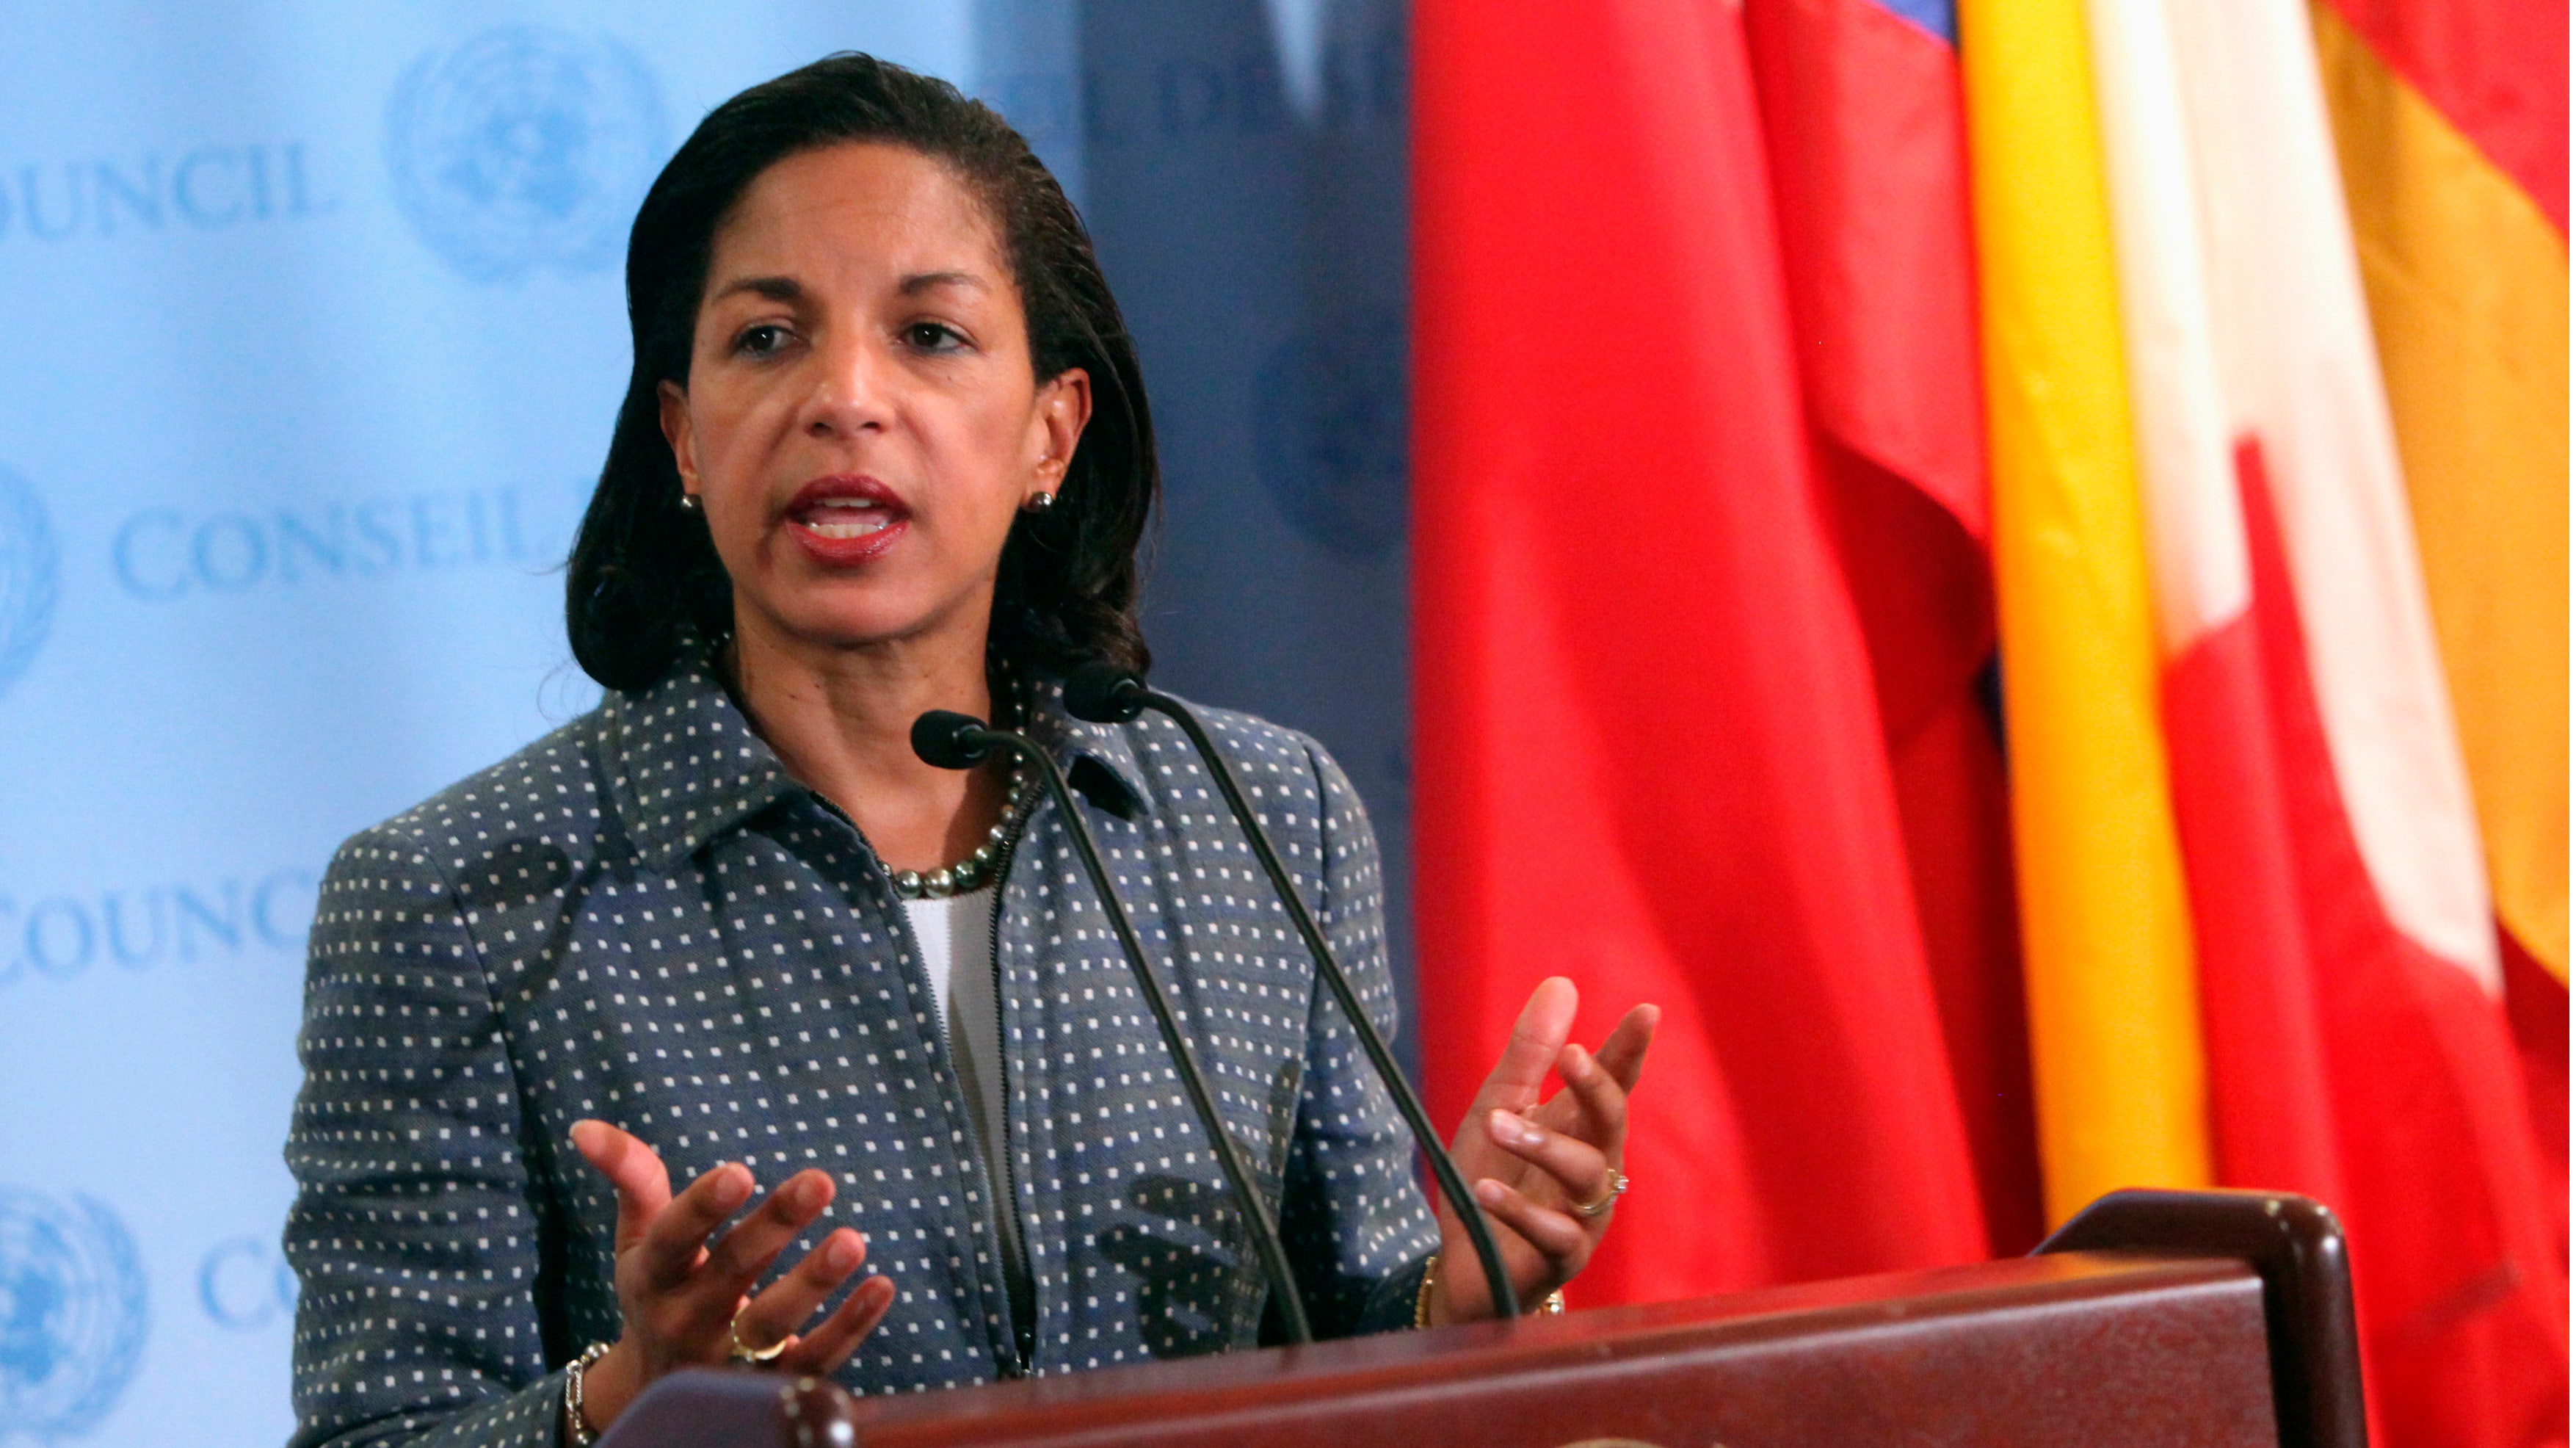 Ambassador Susan Rice top contender to become next national security adviser | Fox News